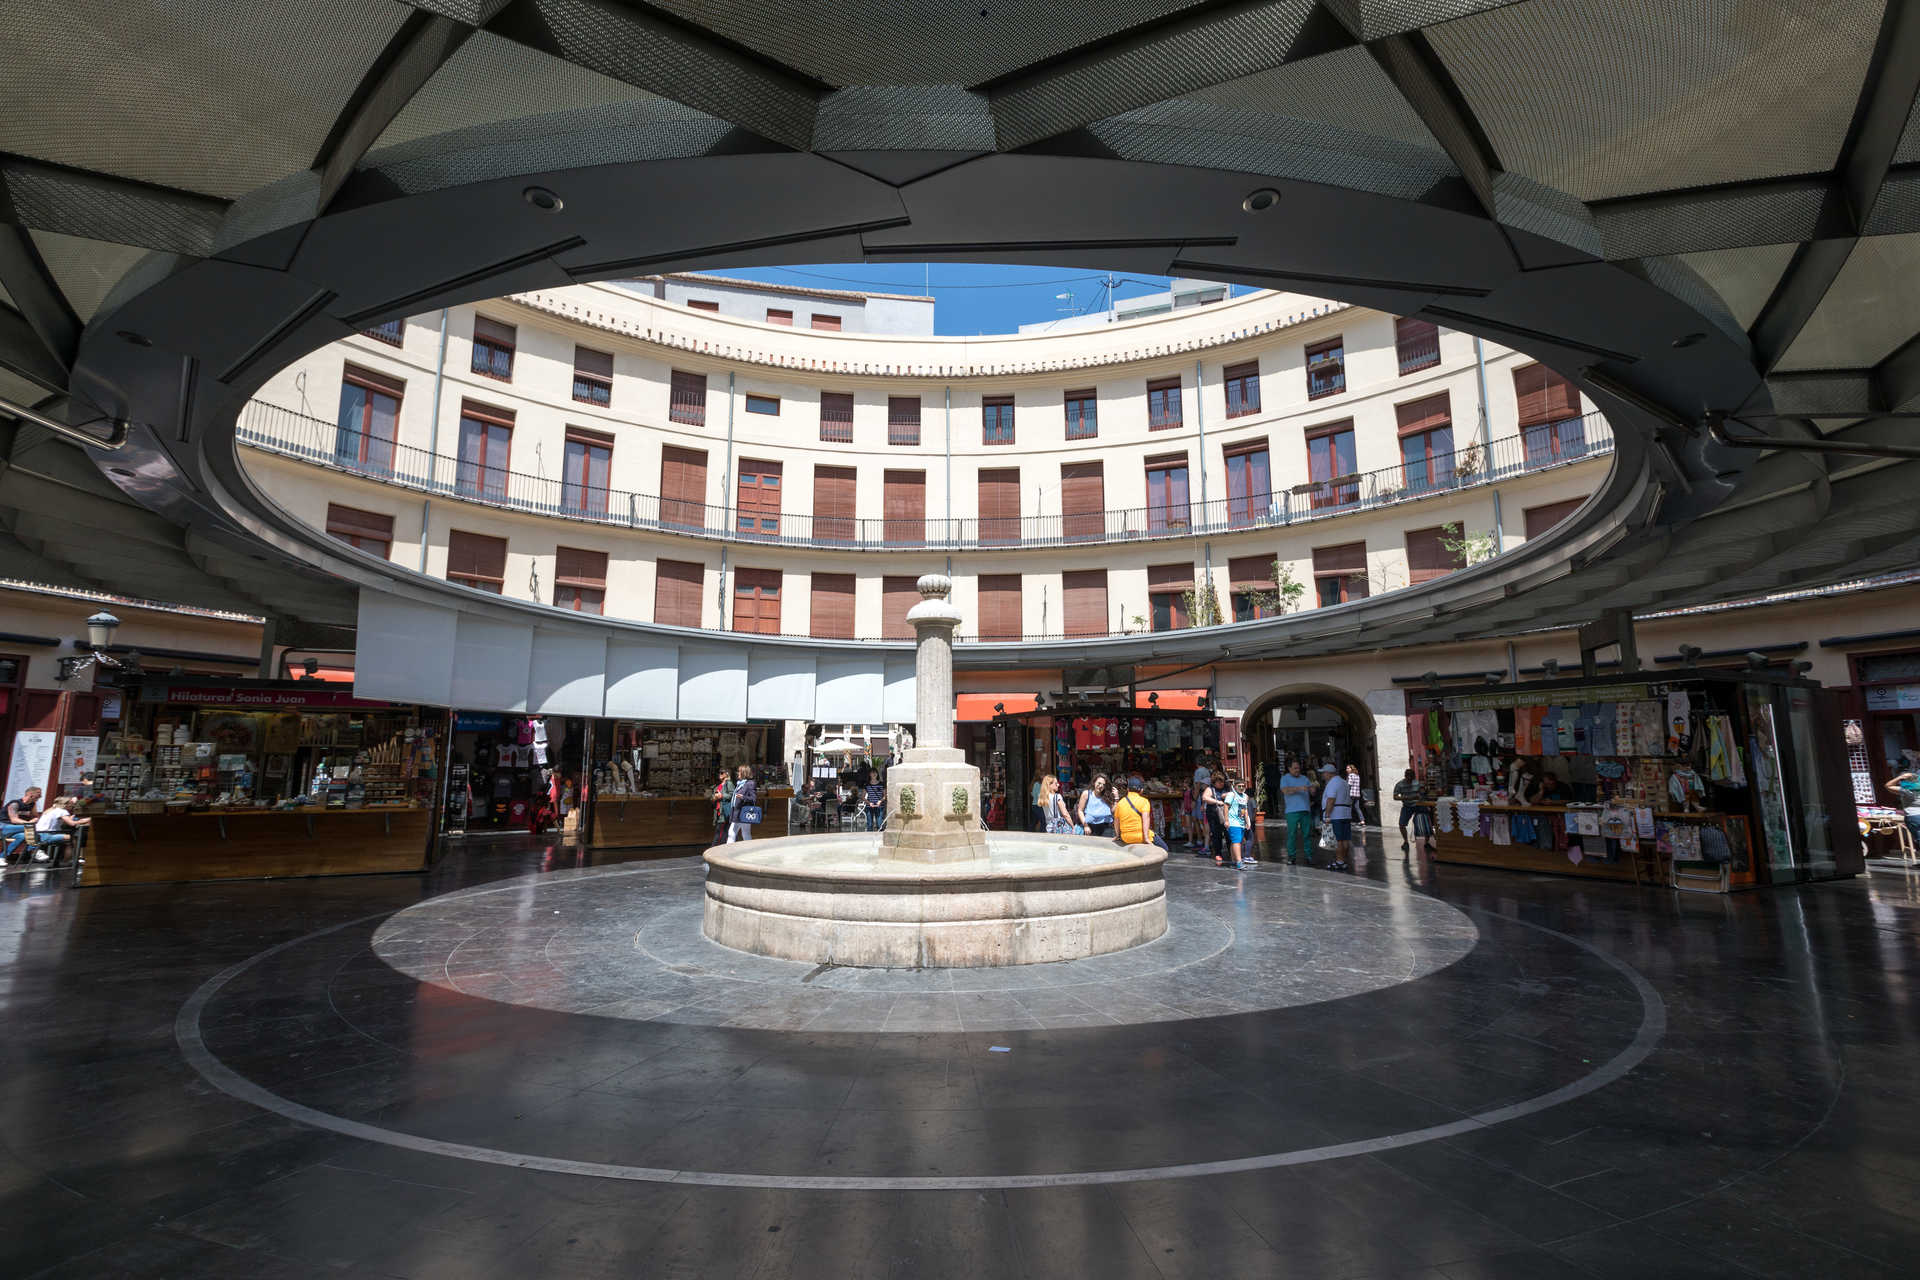 The Redonda Square